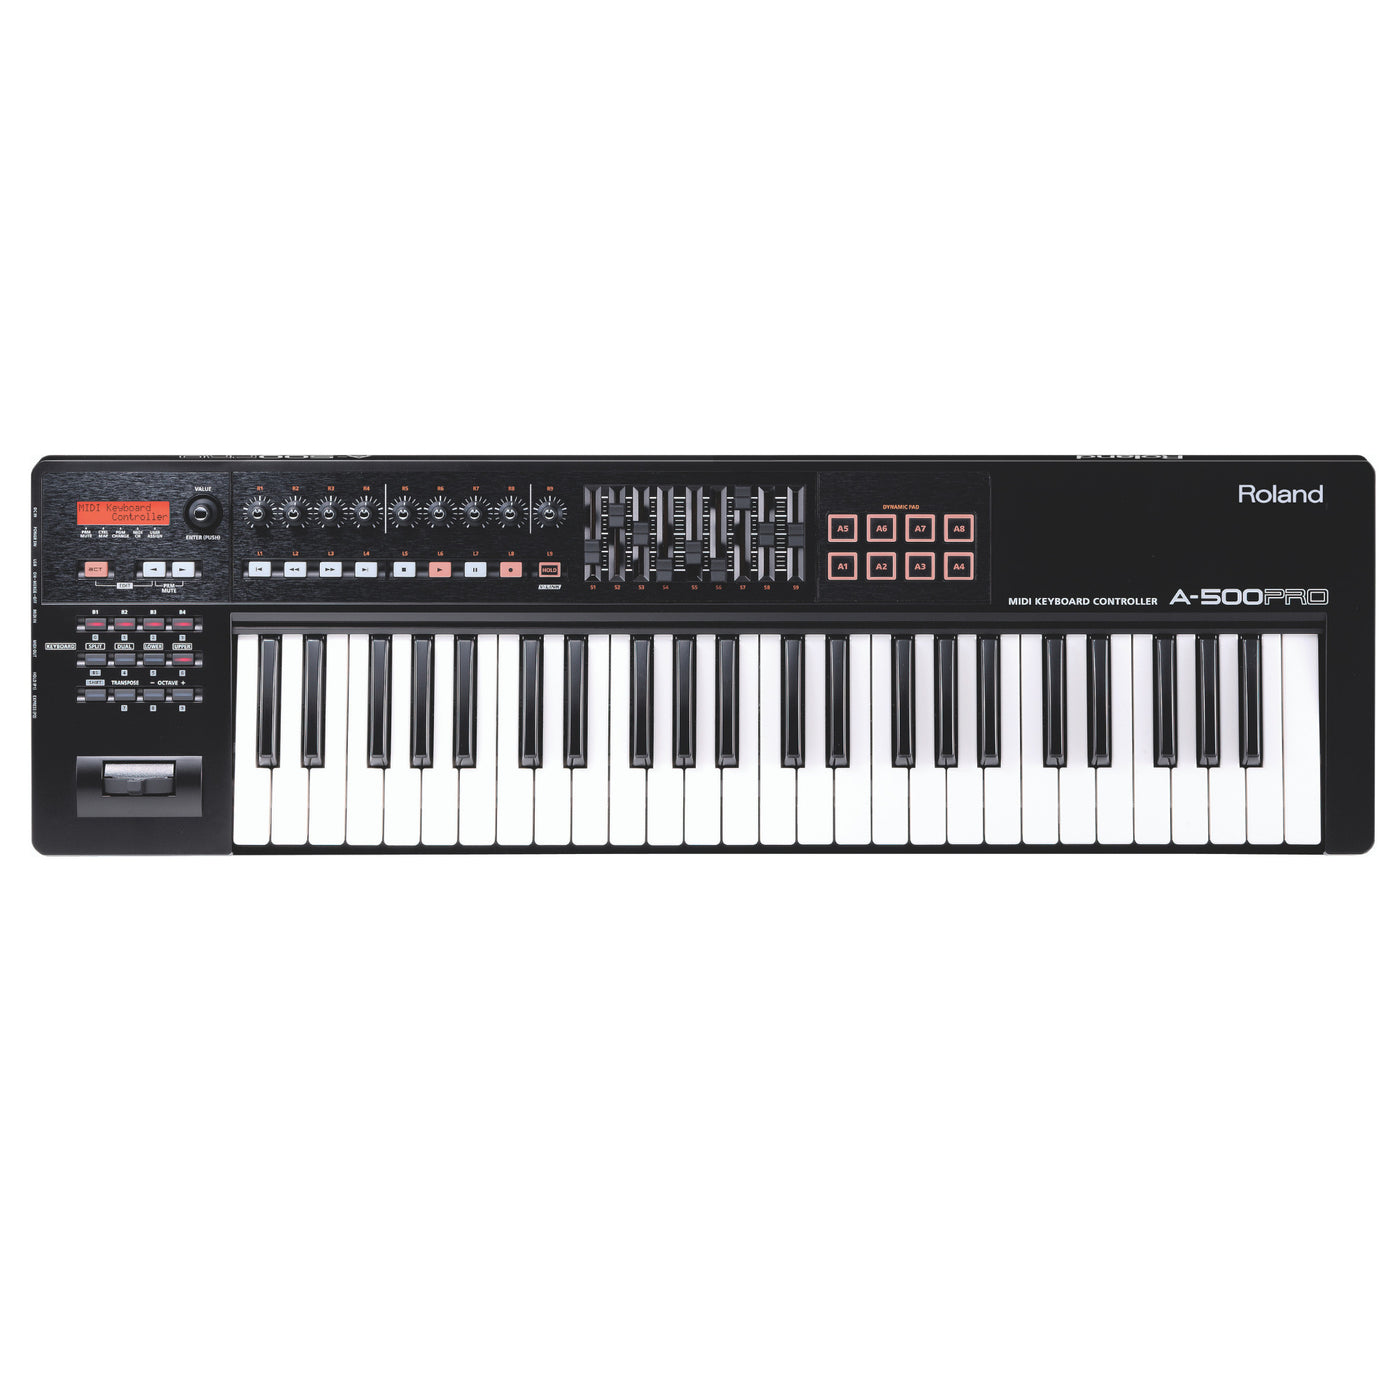 Roland A-500 PRO MIDI Keyboard Controller